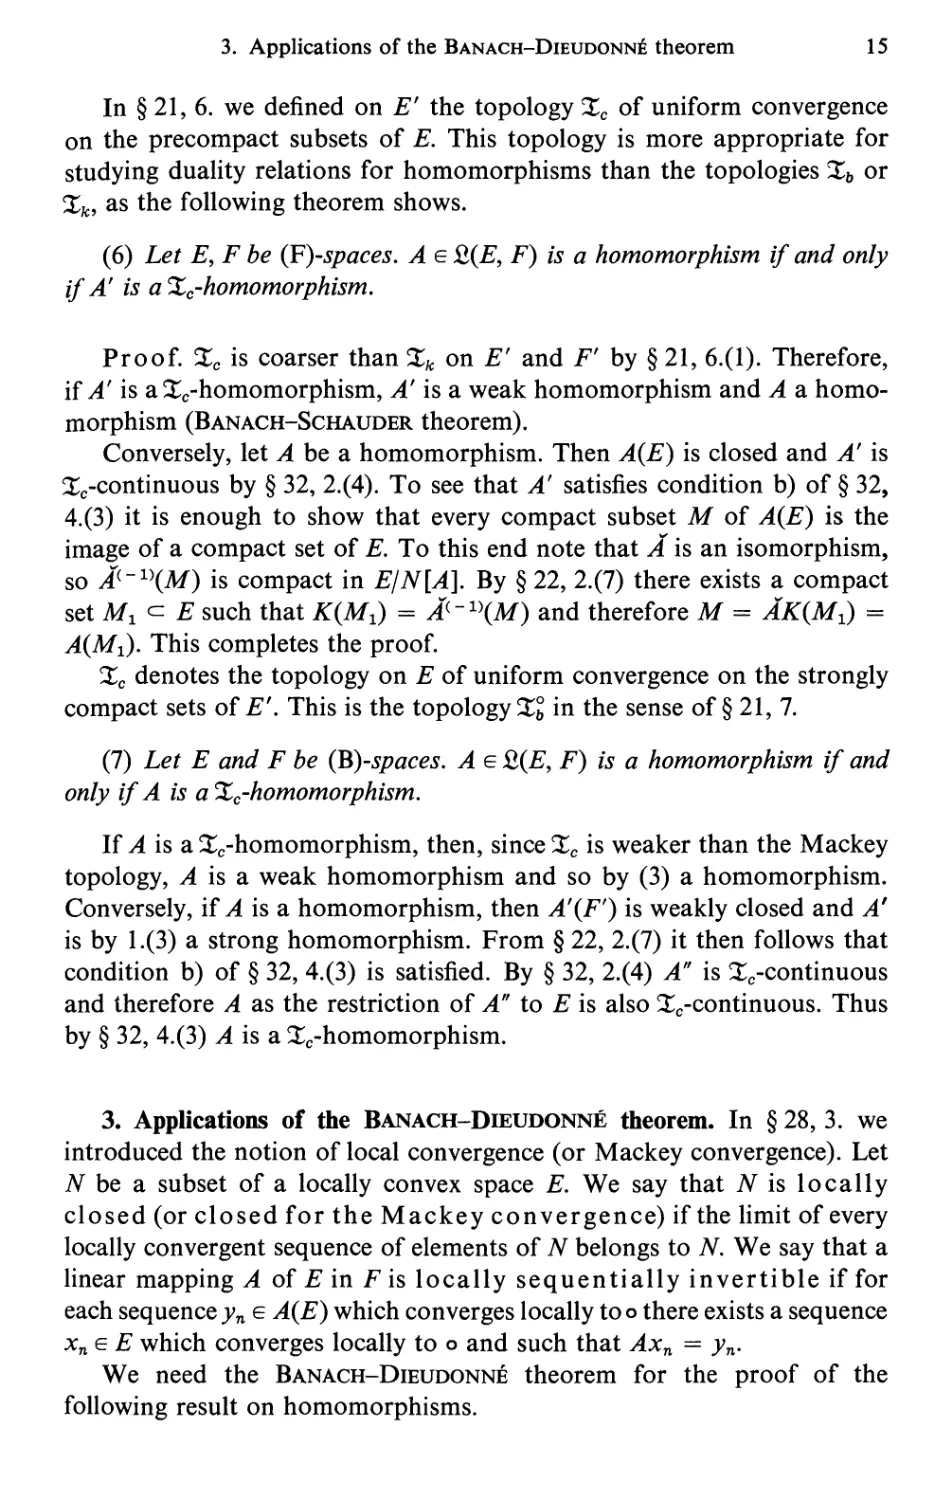 3. Applications of the Banach-Dieudonné theorem